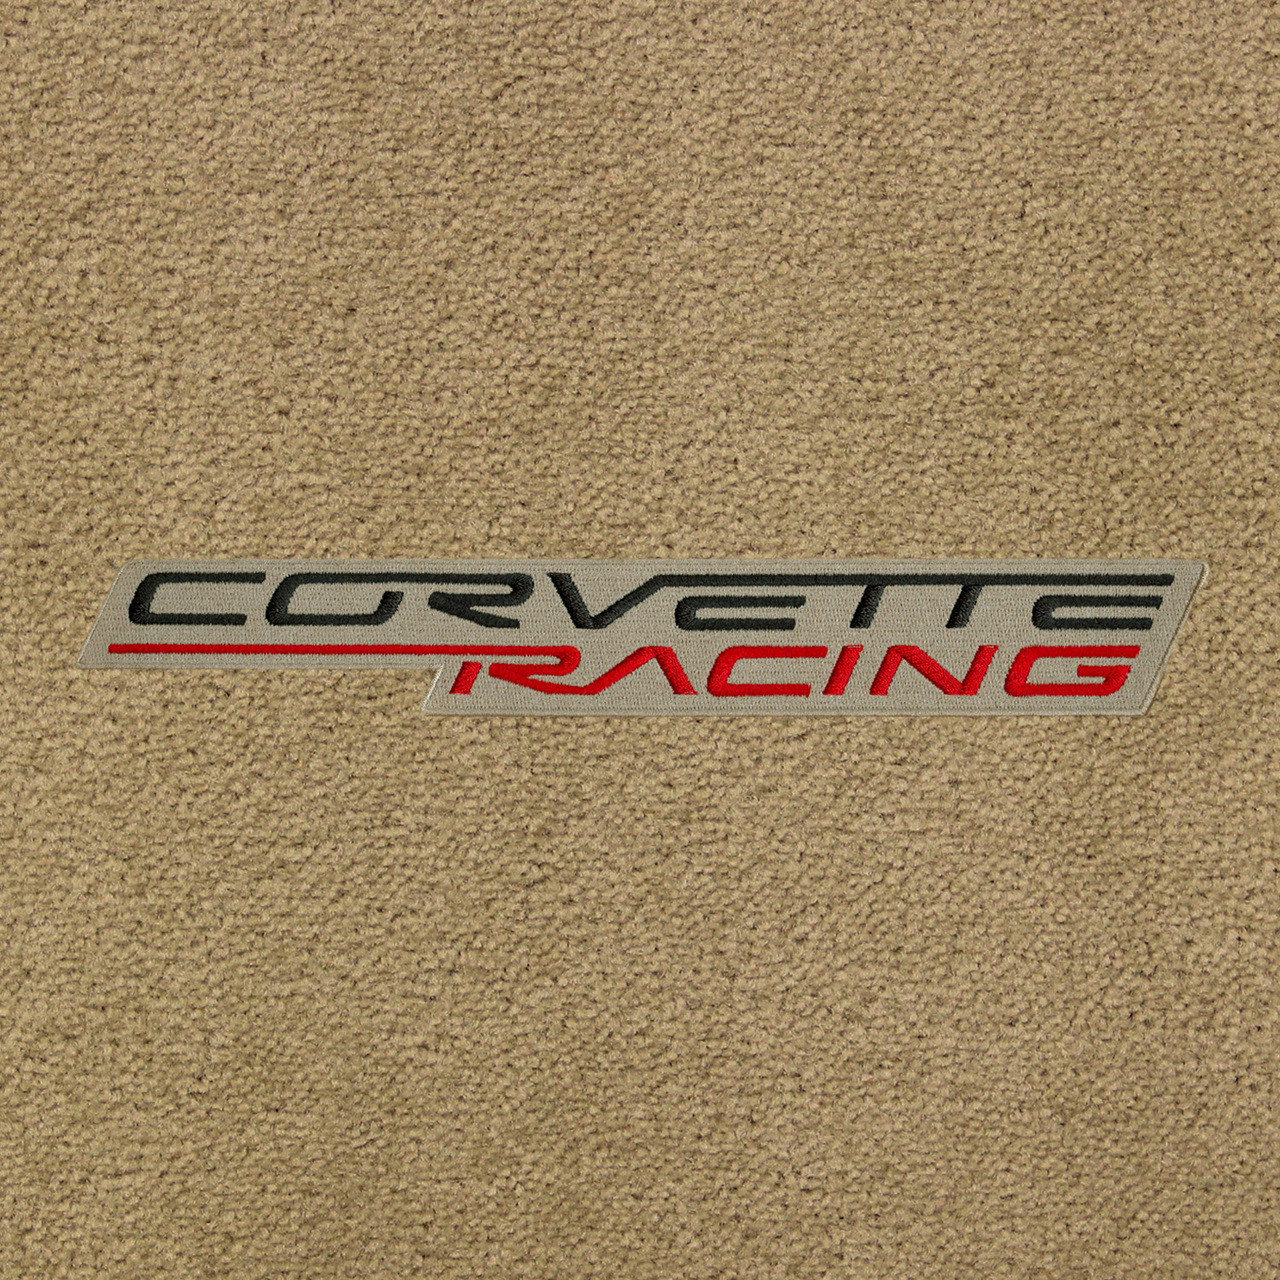 C6 Corvette Racing, Beige Background on Cashmere Mat